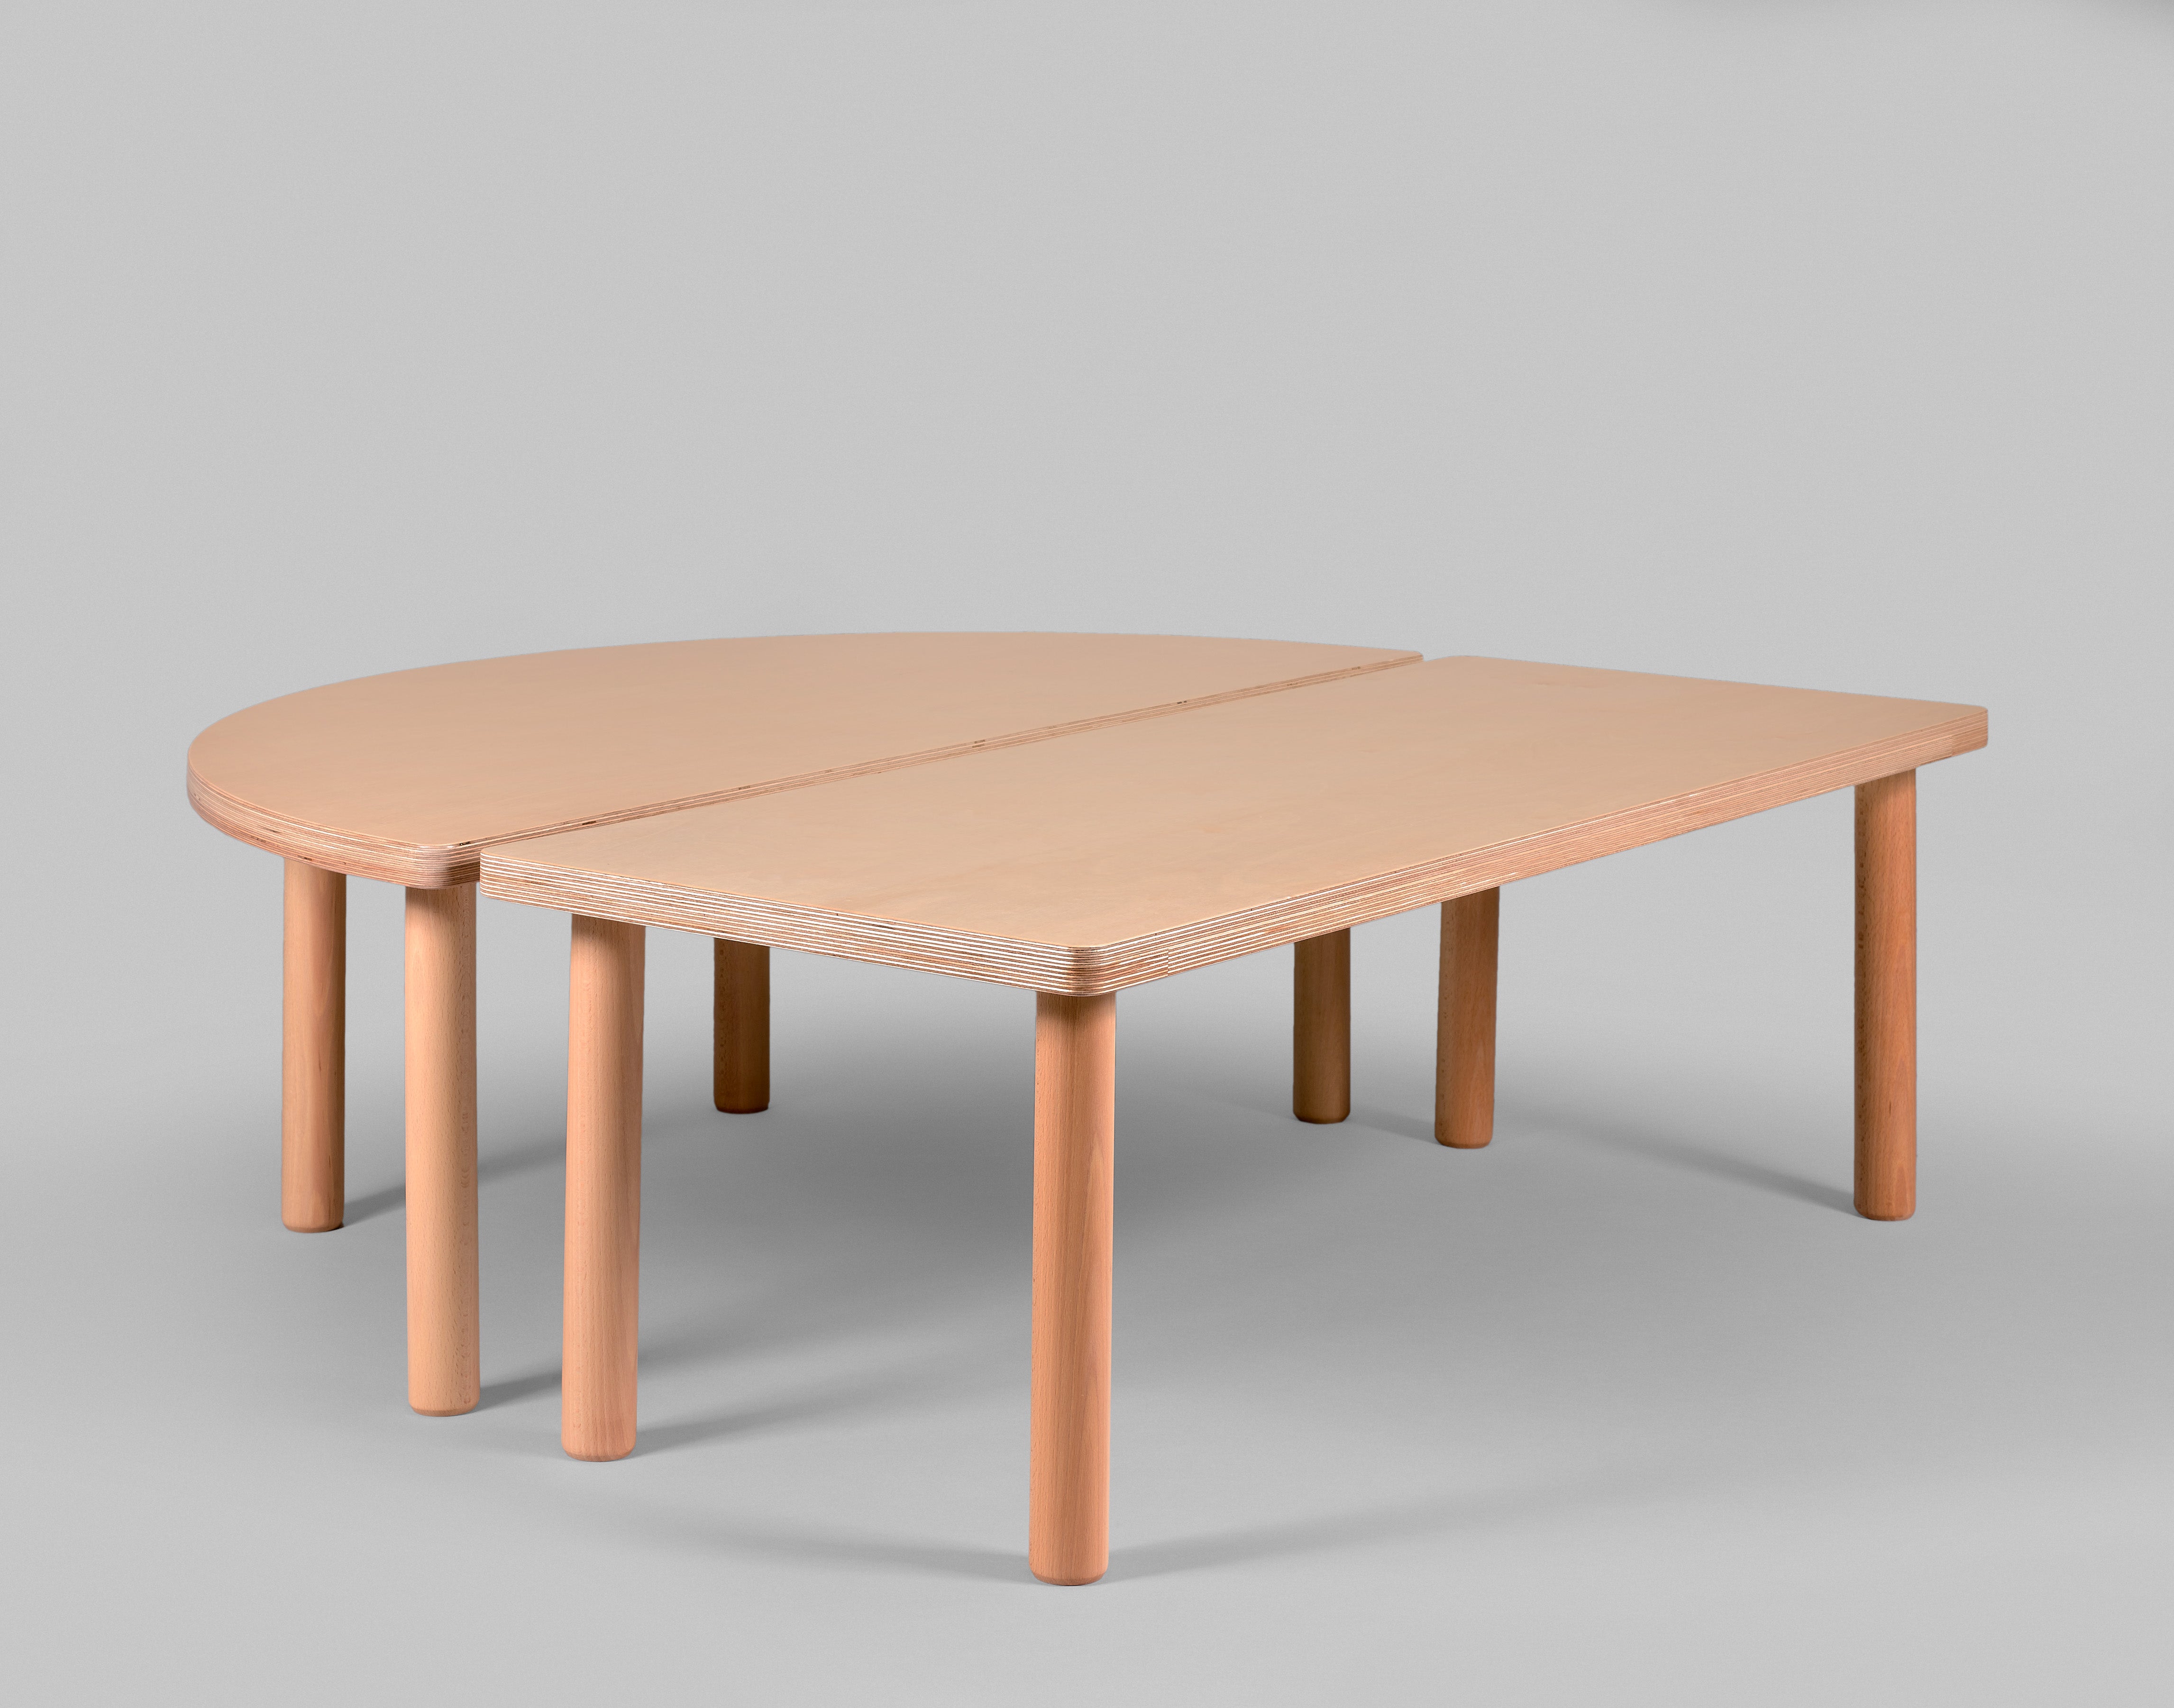 Table demi-lune - Extension rectangulaire